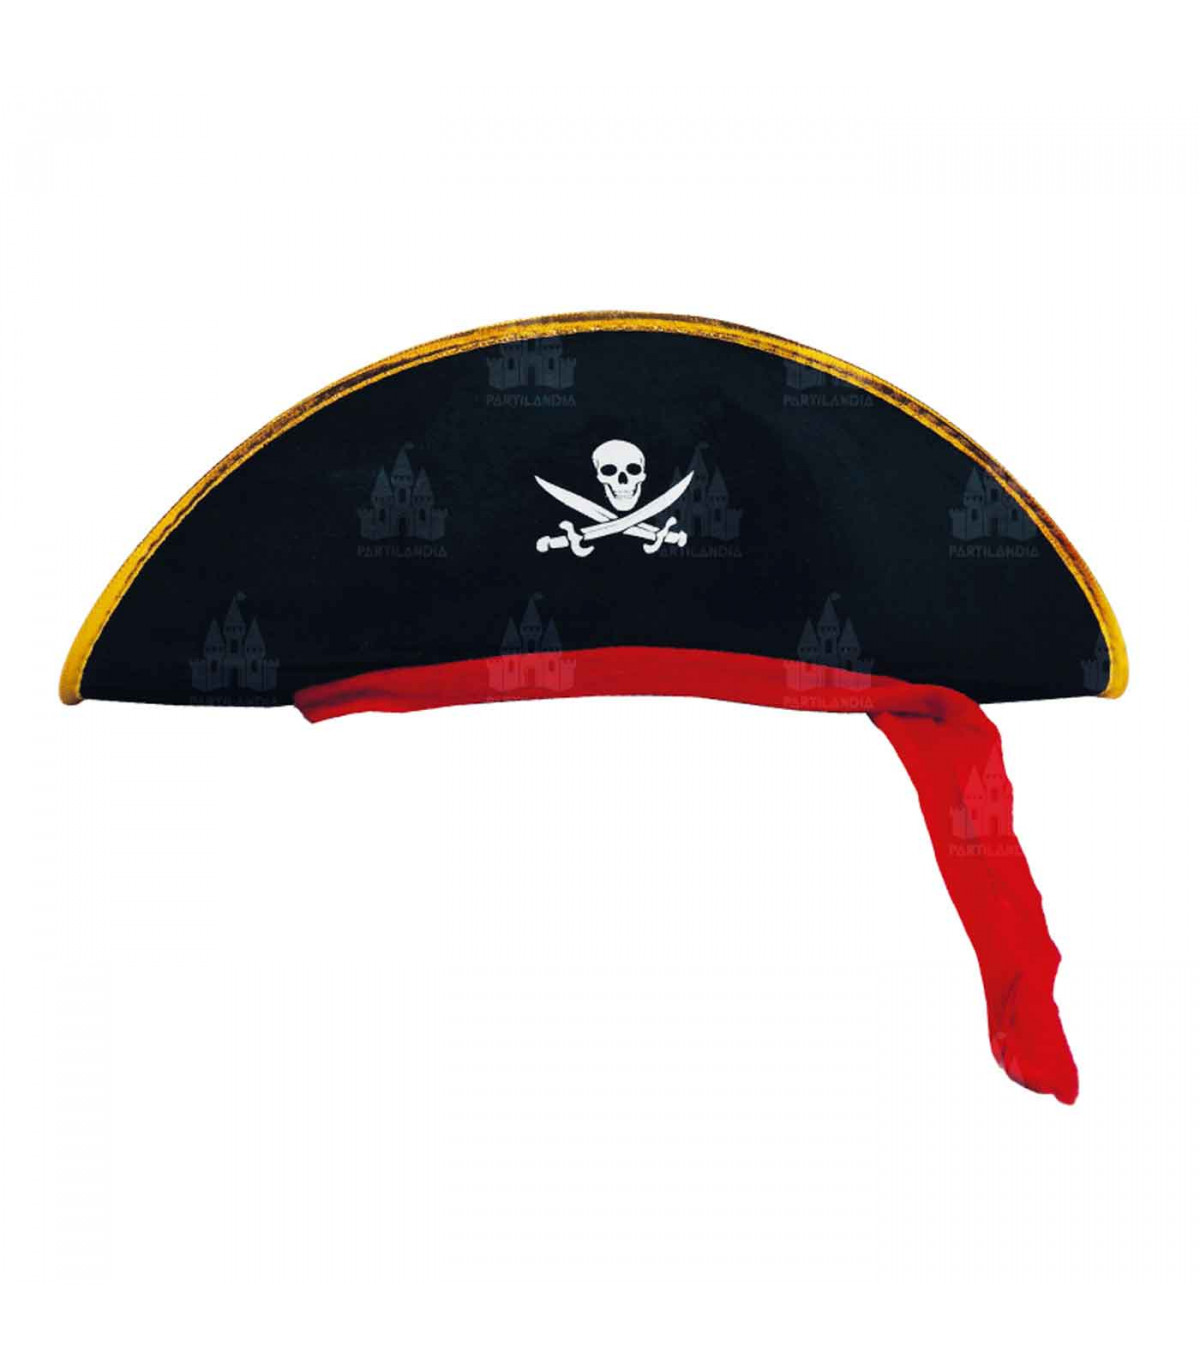 Sombrero pirata mujer de terciopelo negro con adornos rojos con